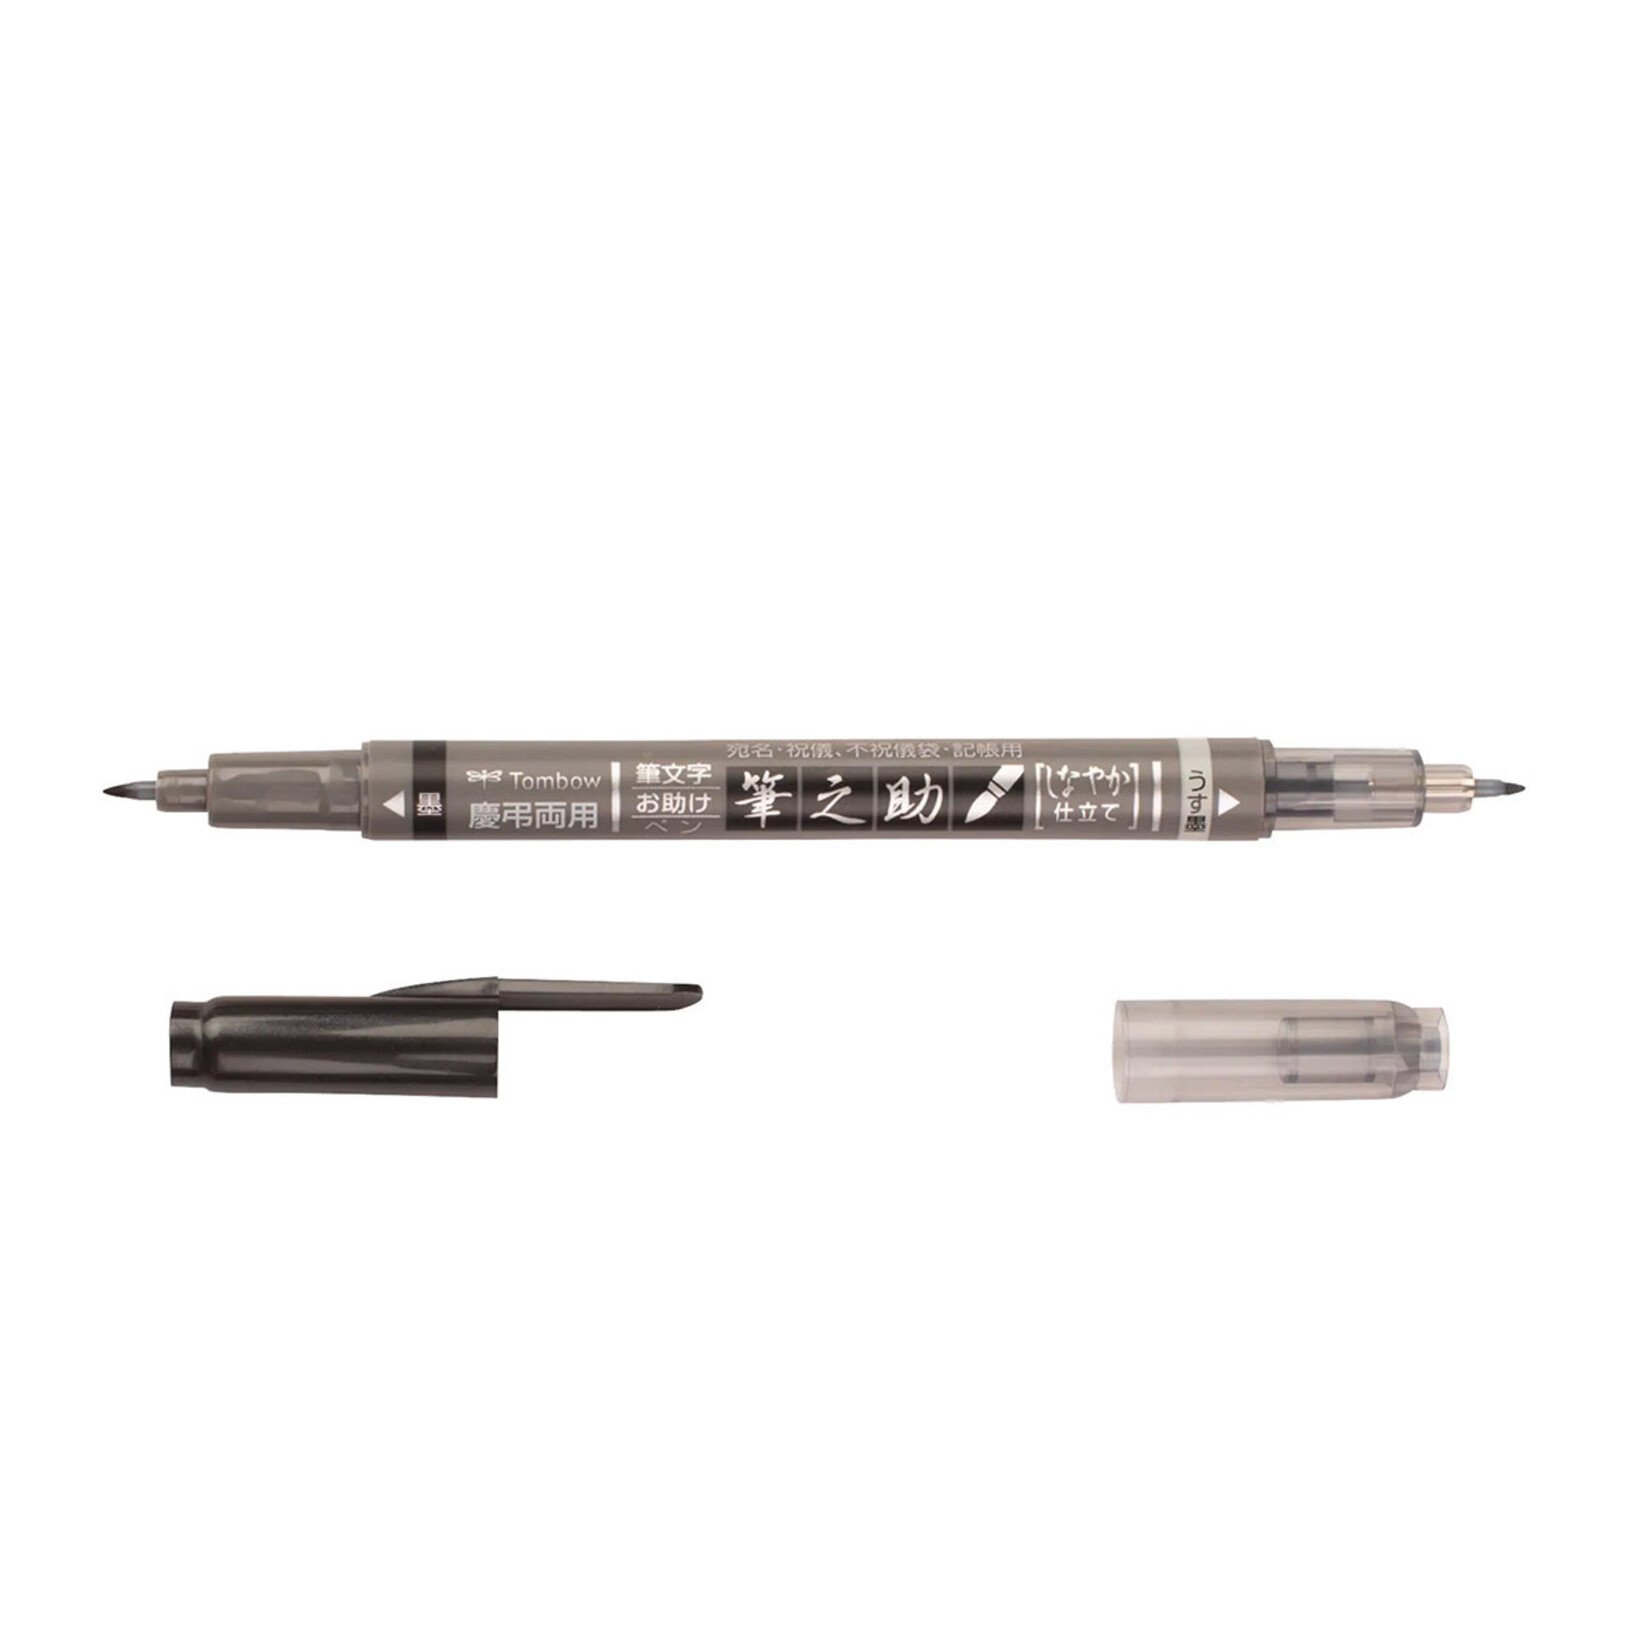 Tombow Black/Gray Dual Tip Fudenosuke Brush Pen